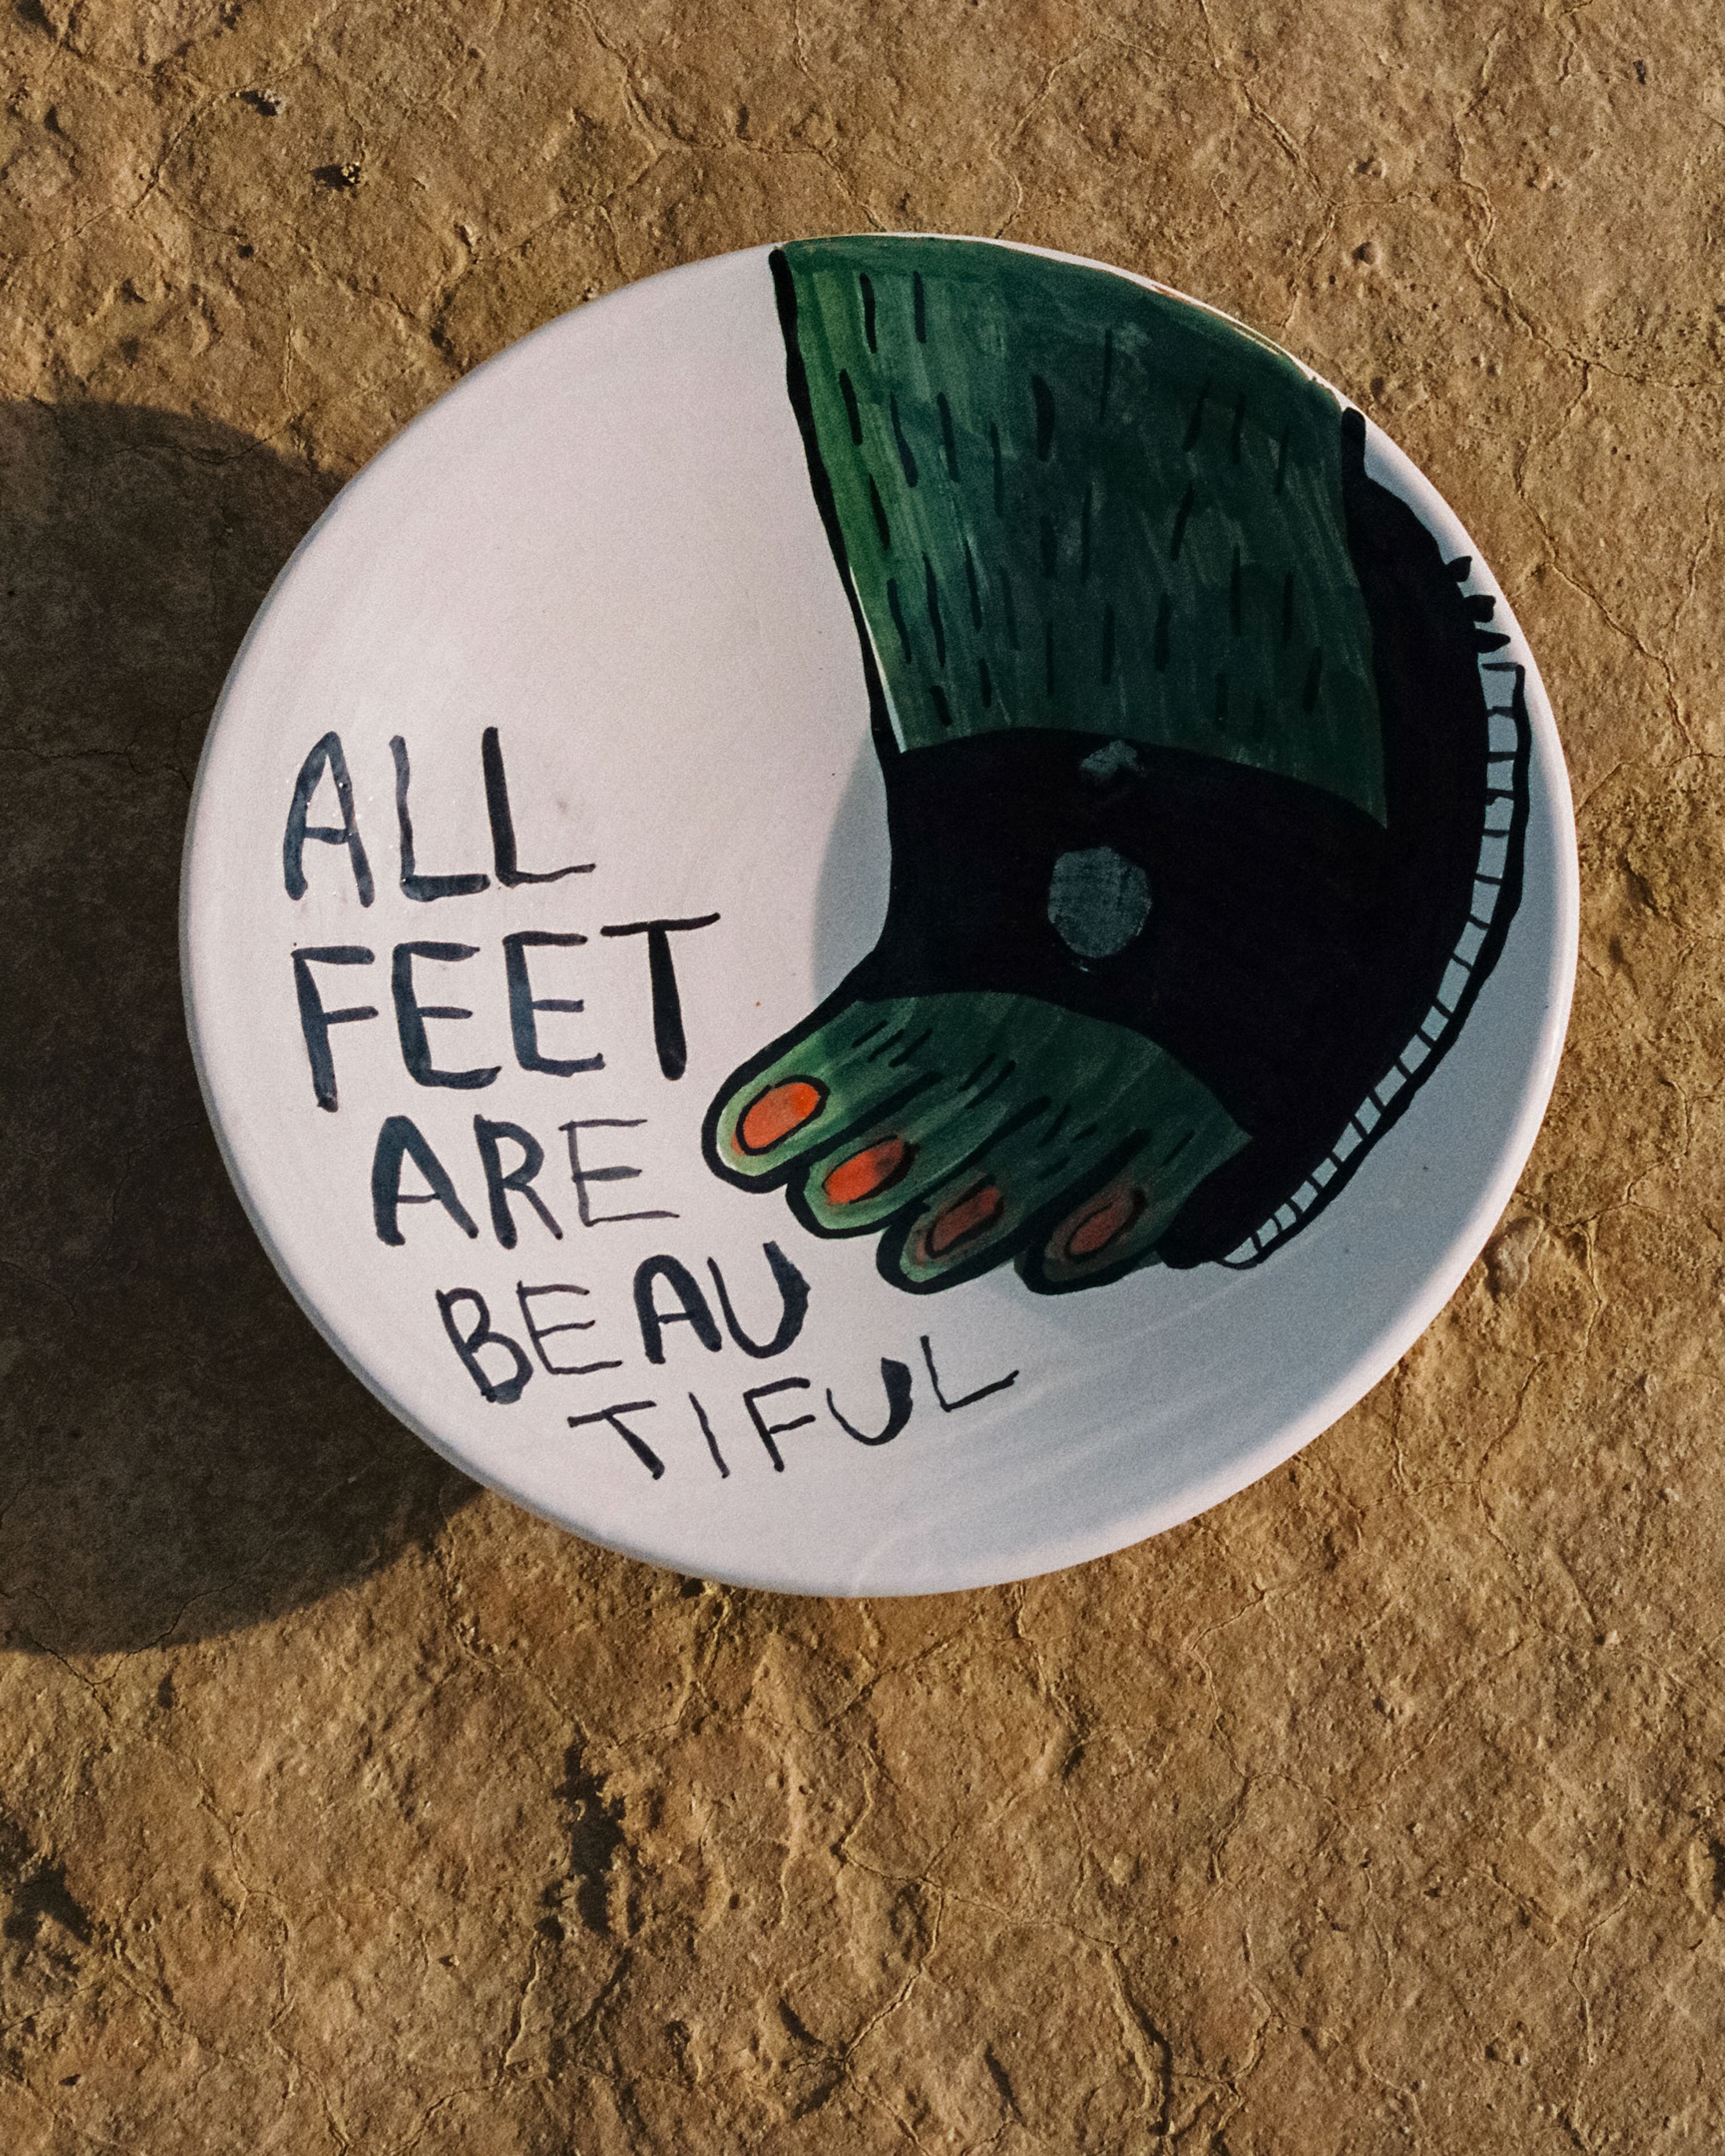 "All feet are beautiful" big platter